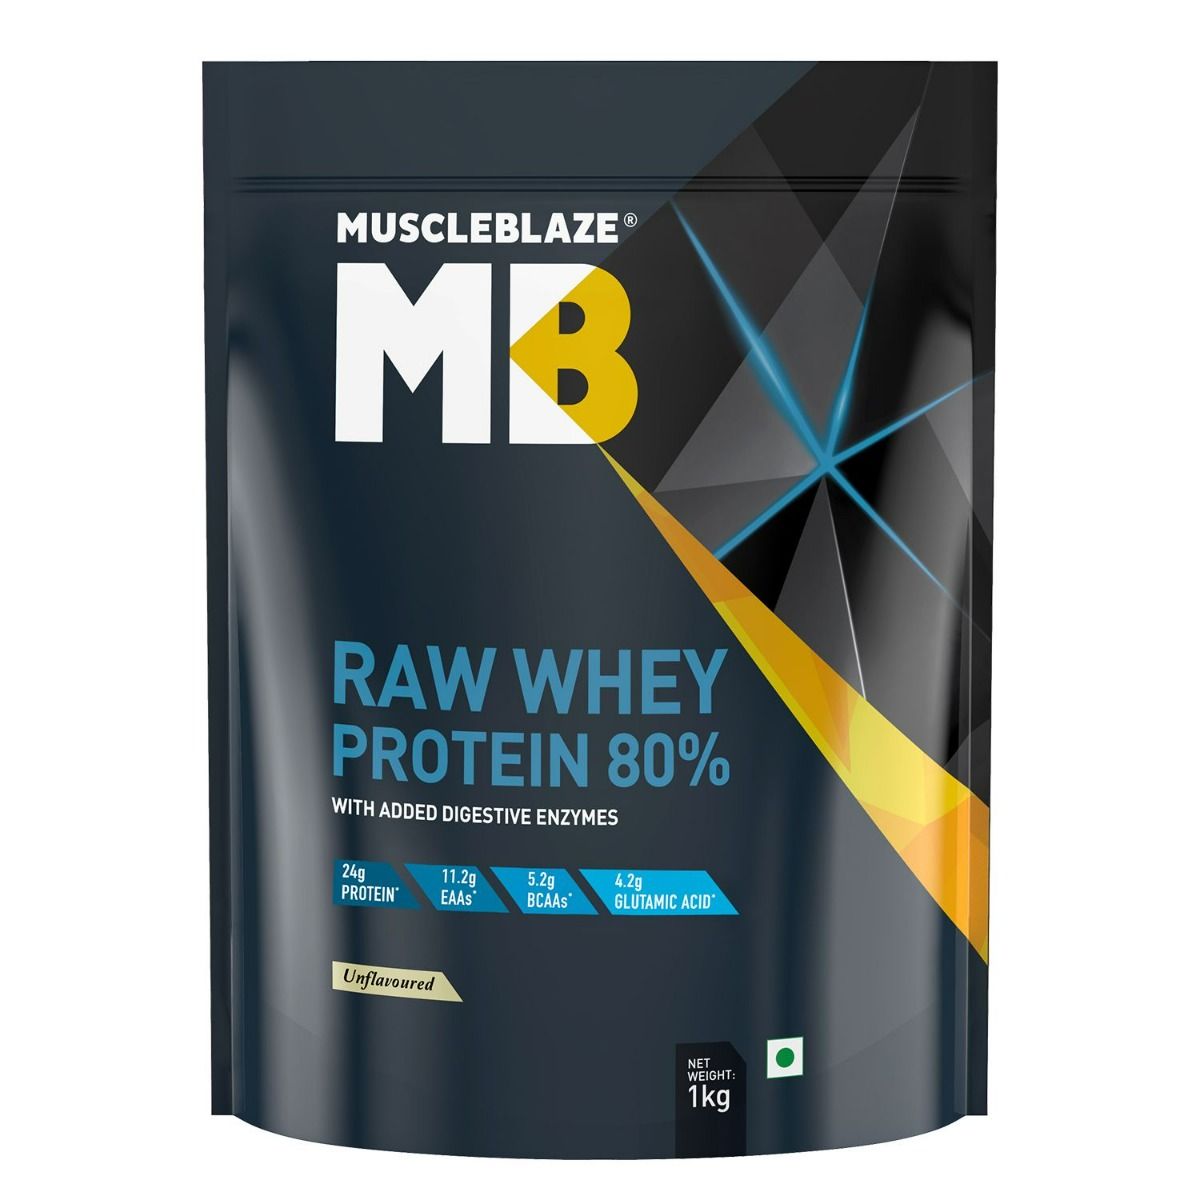 MuscleBlaze Raw Whey Protein 80% Powder, 1 kg, Pack of 1 